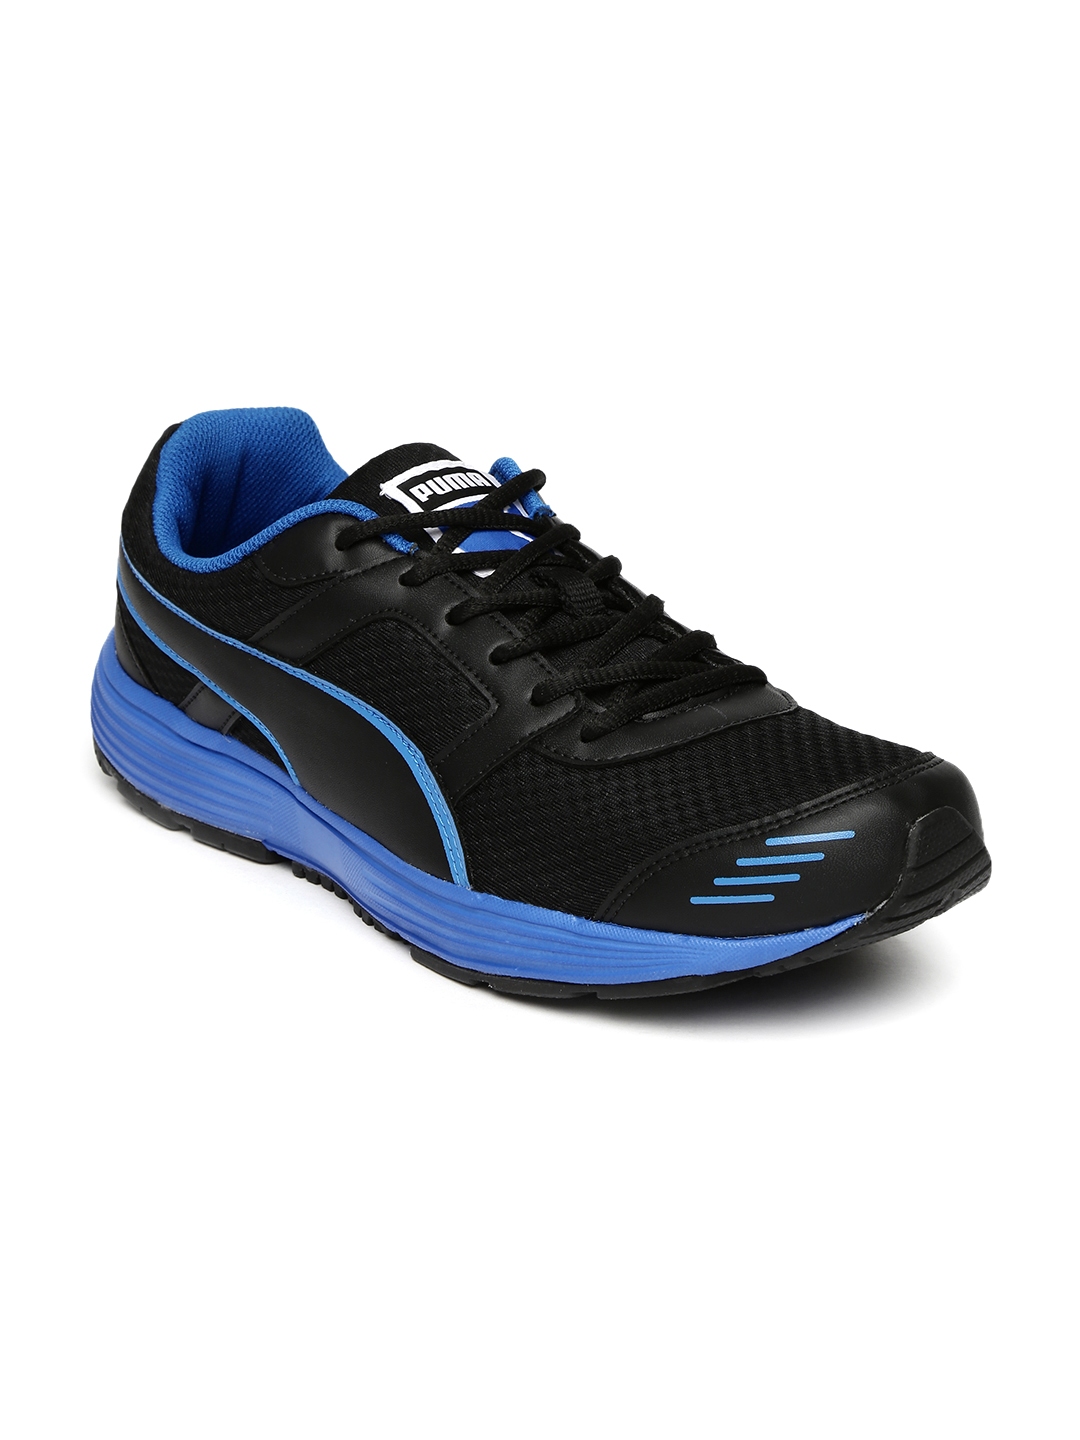 Buy Puma Men Black Running Shoes - Sports Shoes for Men 2254234 | Myntra